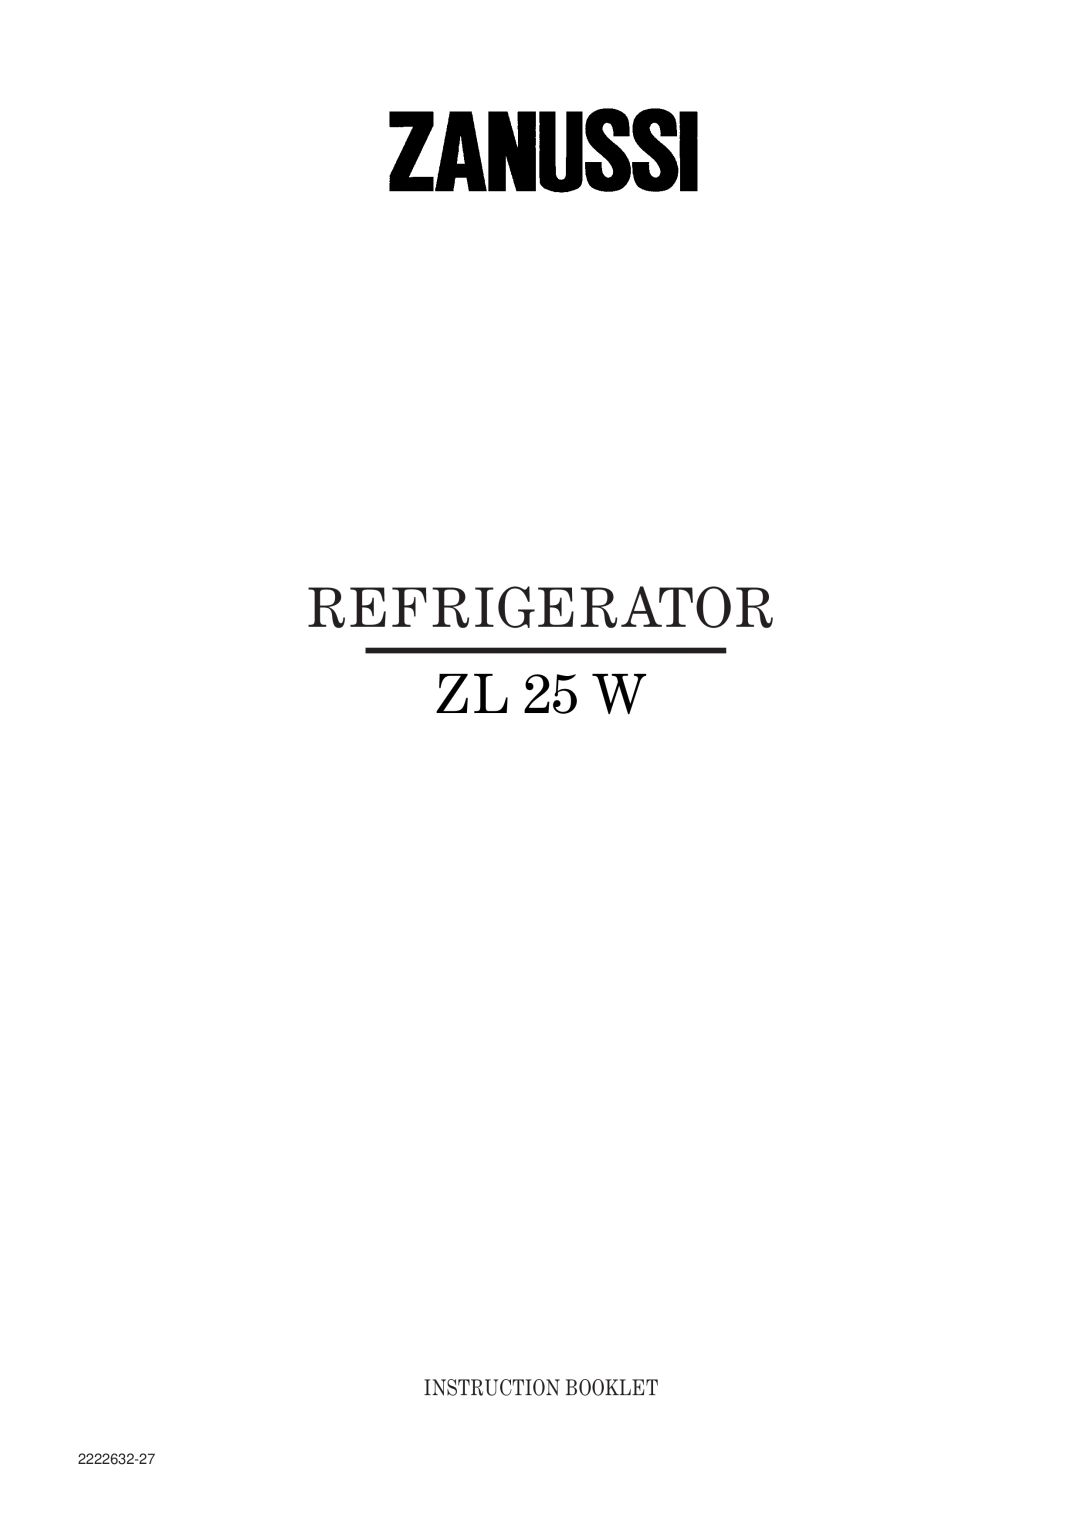 Zanussi ZL 25 W manual Refrigerator, Instruction Booklet, 2222632-27 